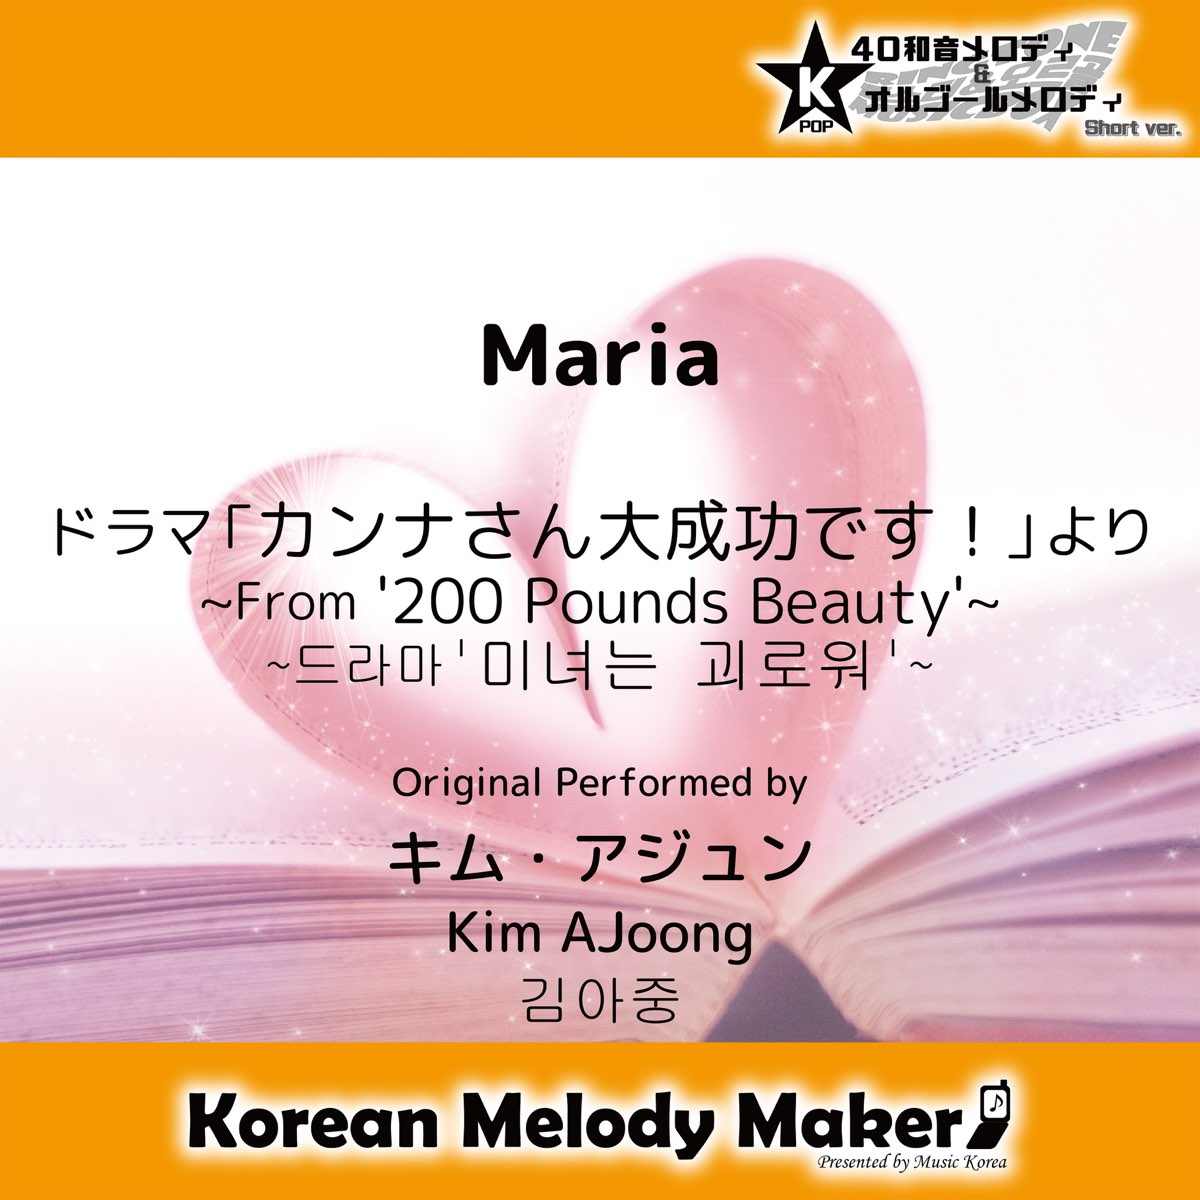 Maria ドラマ カンナさん大成功です より K Pop40和音メロディ オルゴールメロディ Short Ver Single De Korean Melody Maker En Apple Music